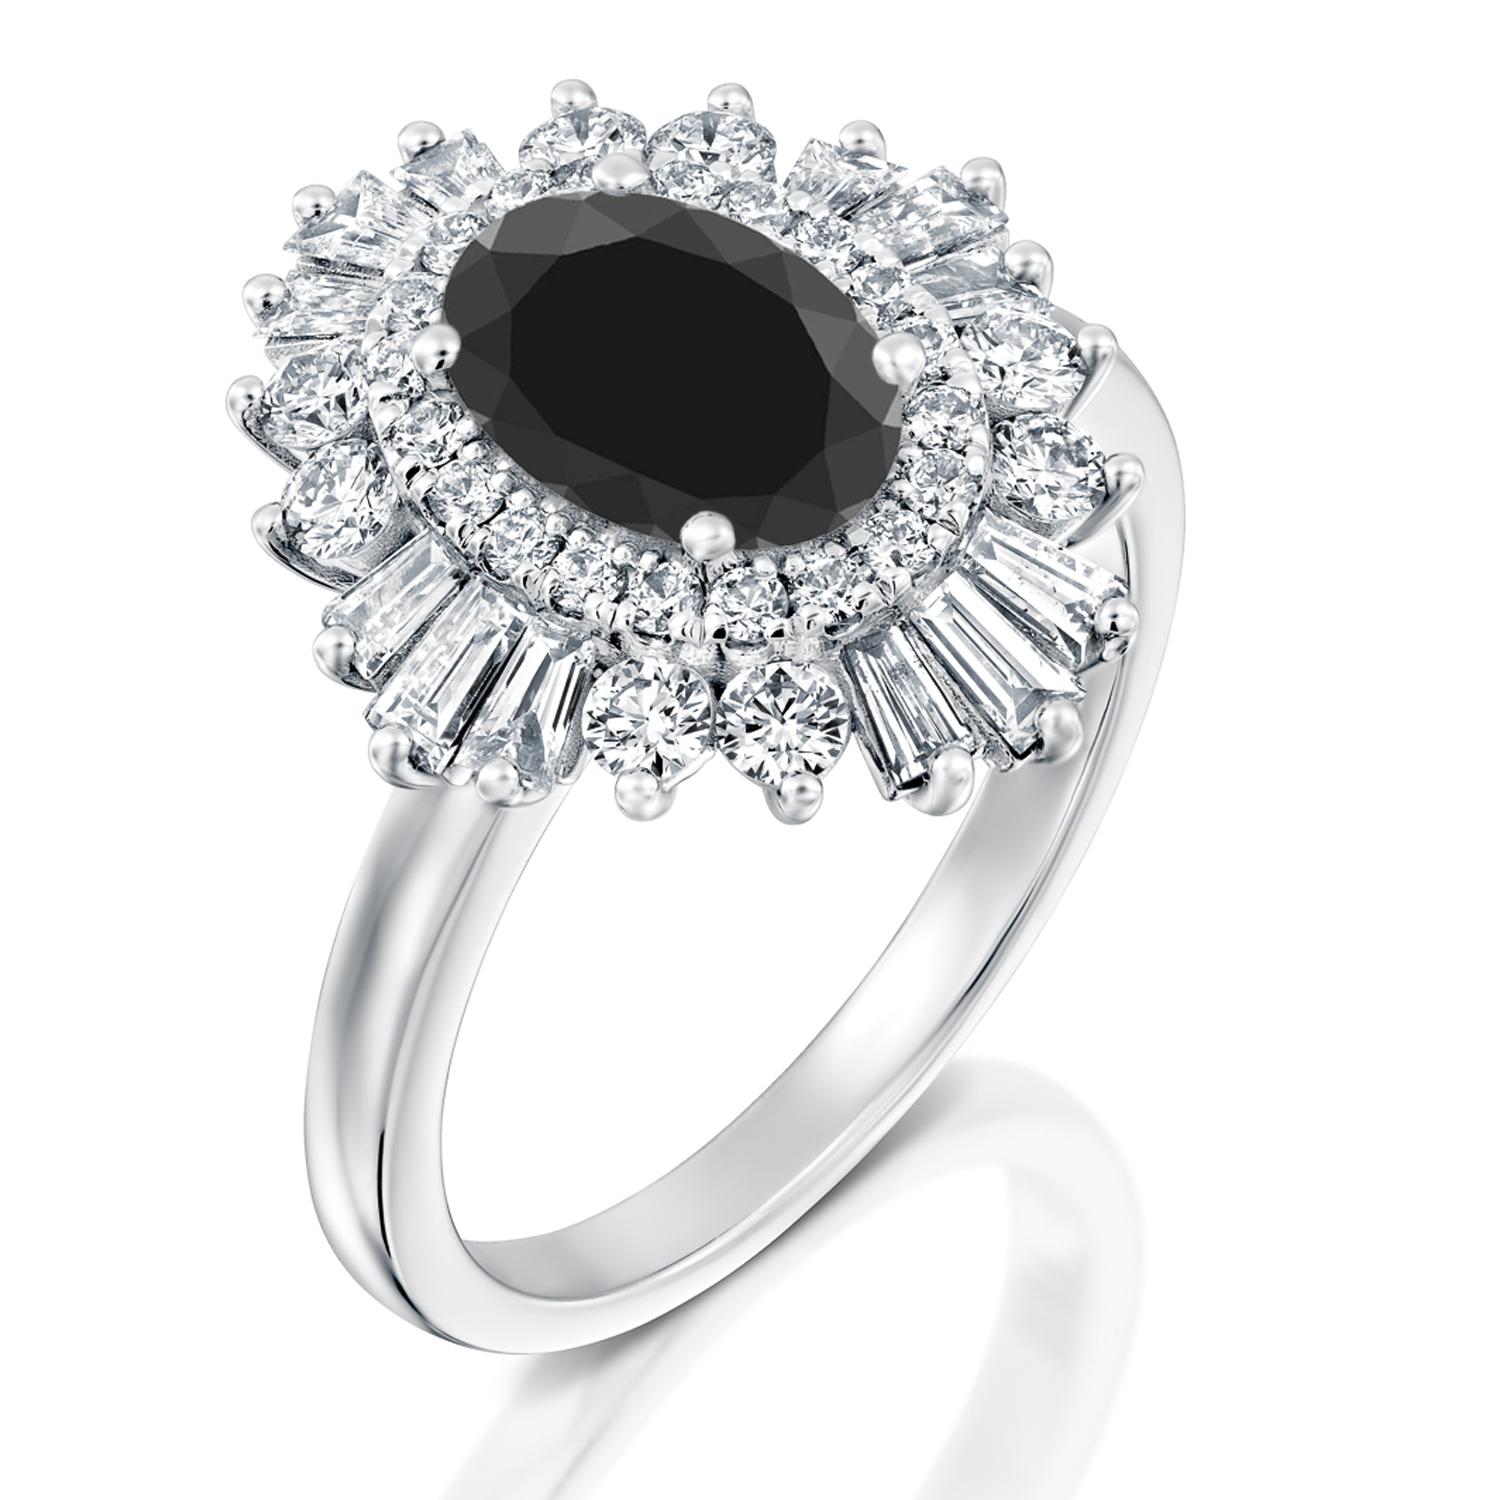 2.5 carat black diamond ring